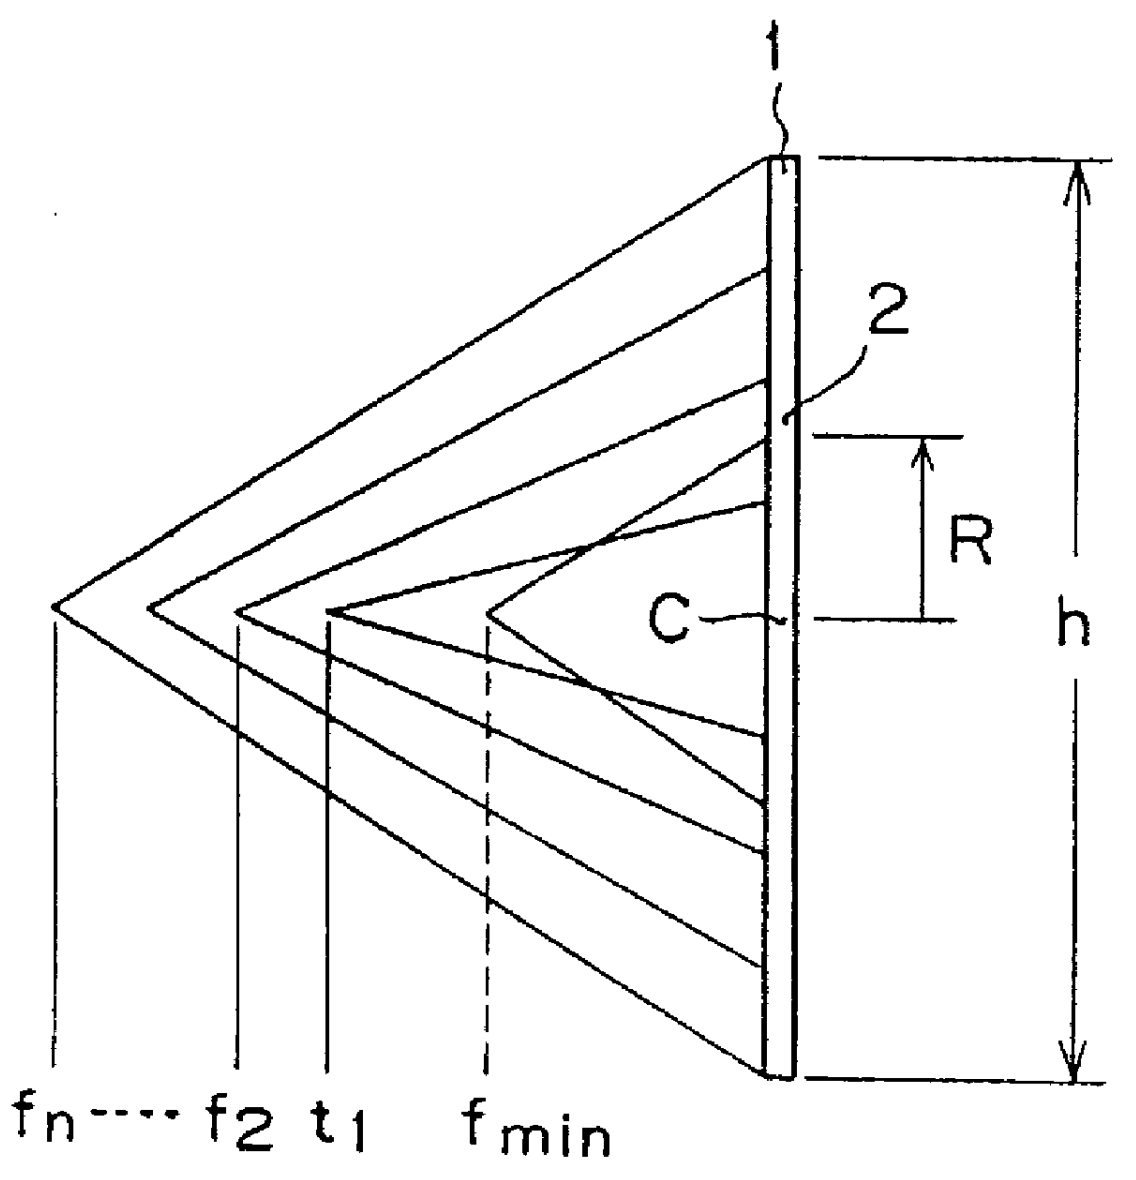 Fresnel lens sheet for rear projection screen